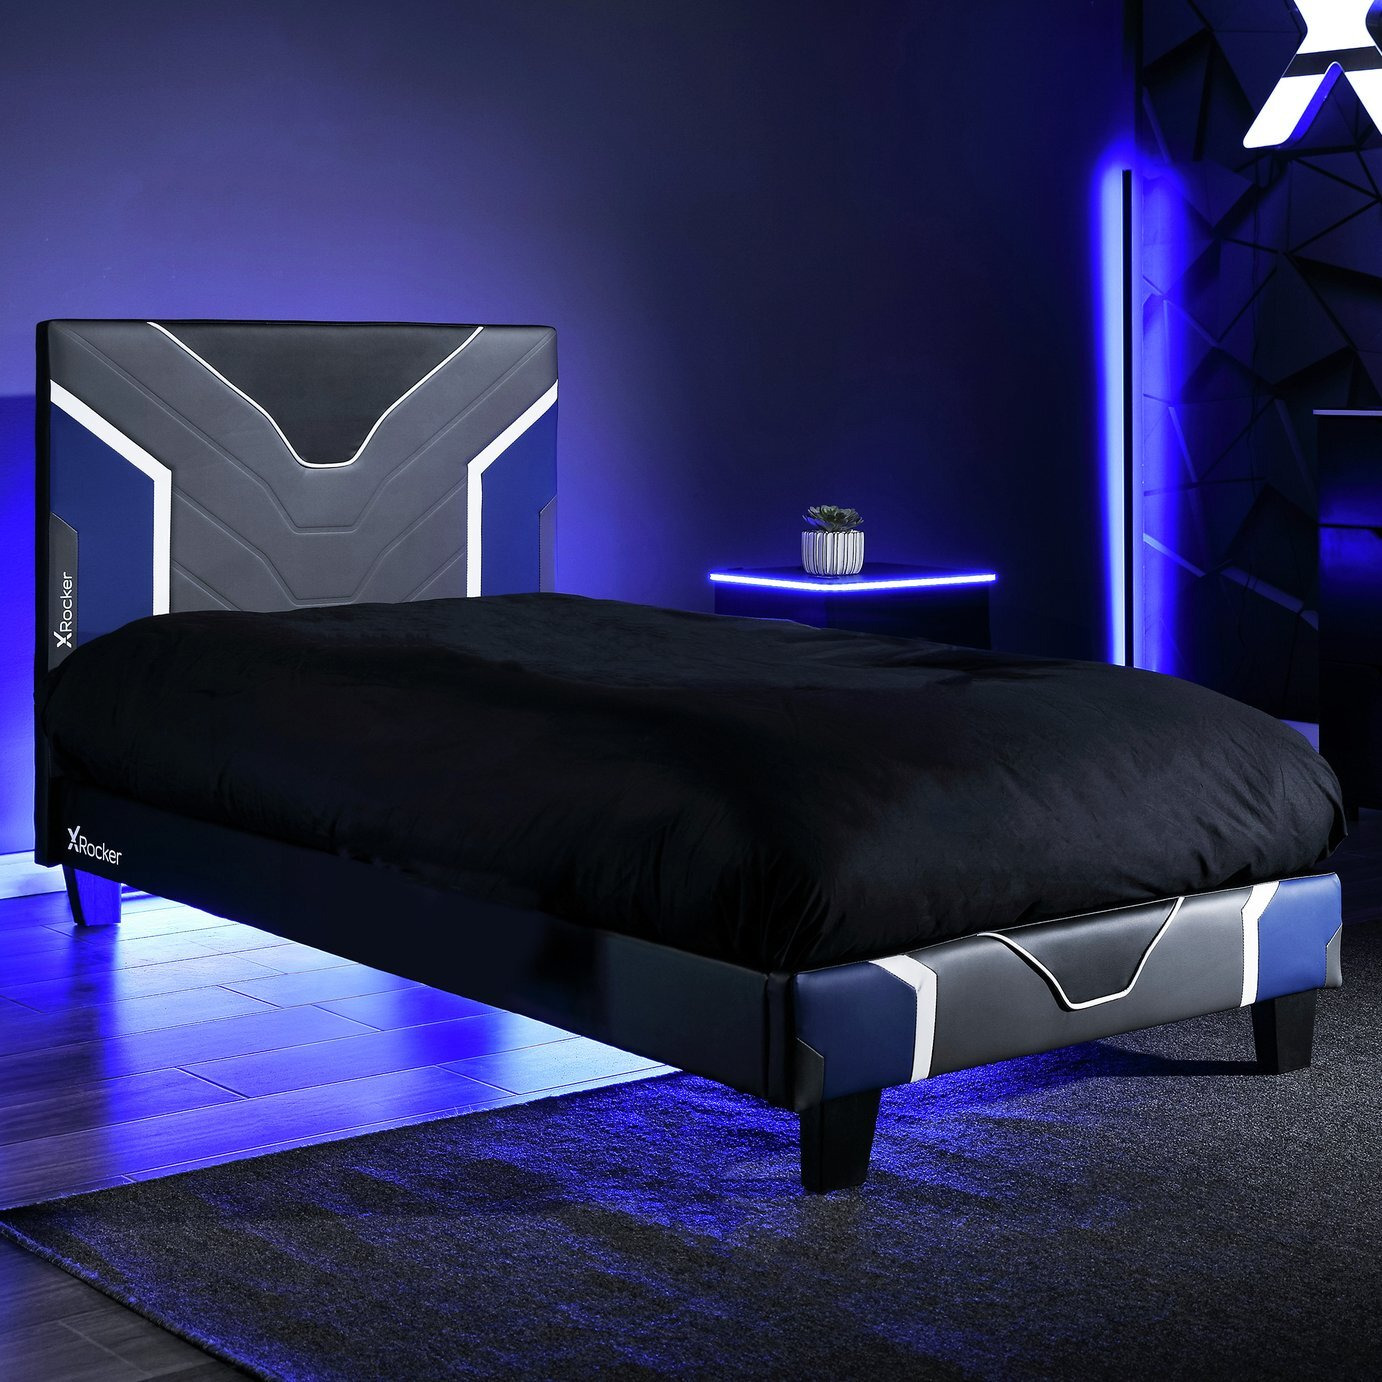 X Rocker Chromis Single Bed in a Box - Blue - image 1